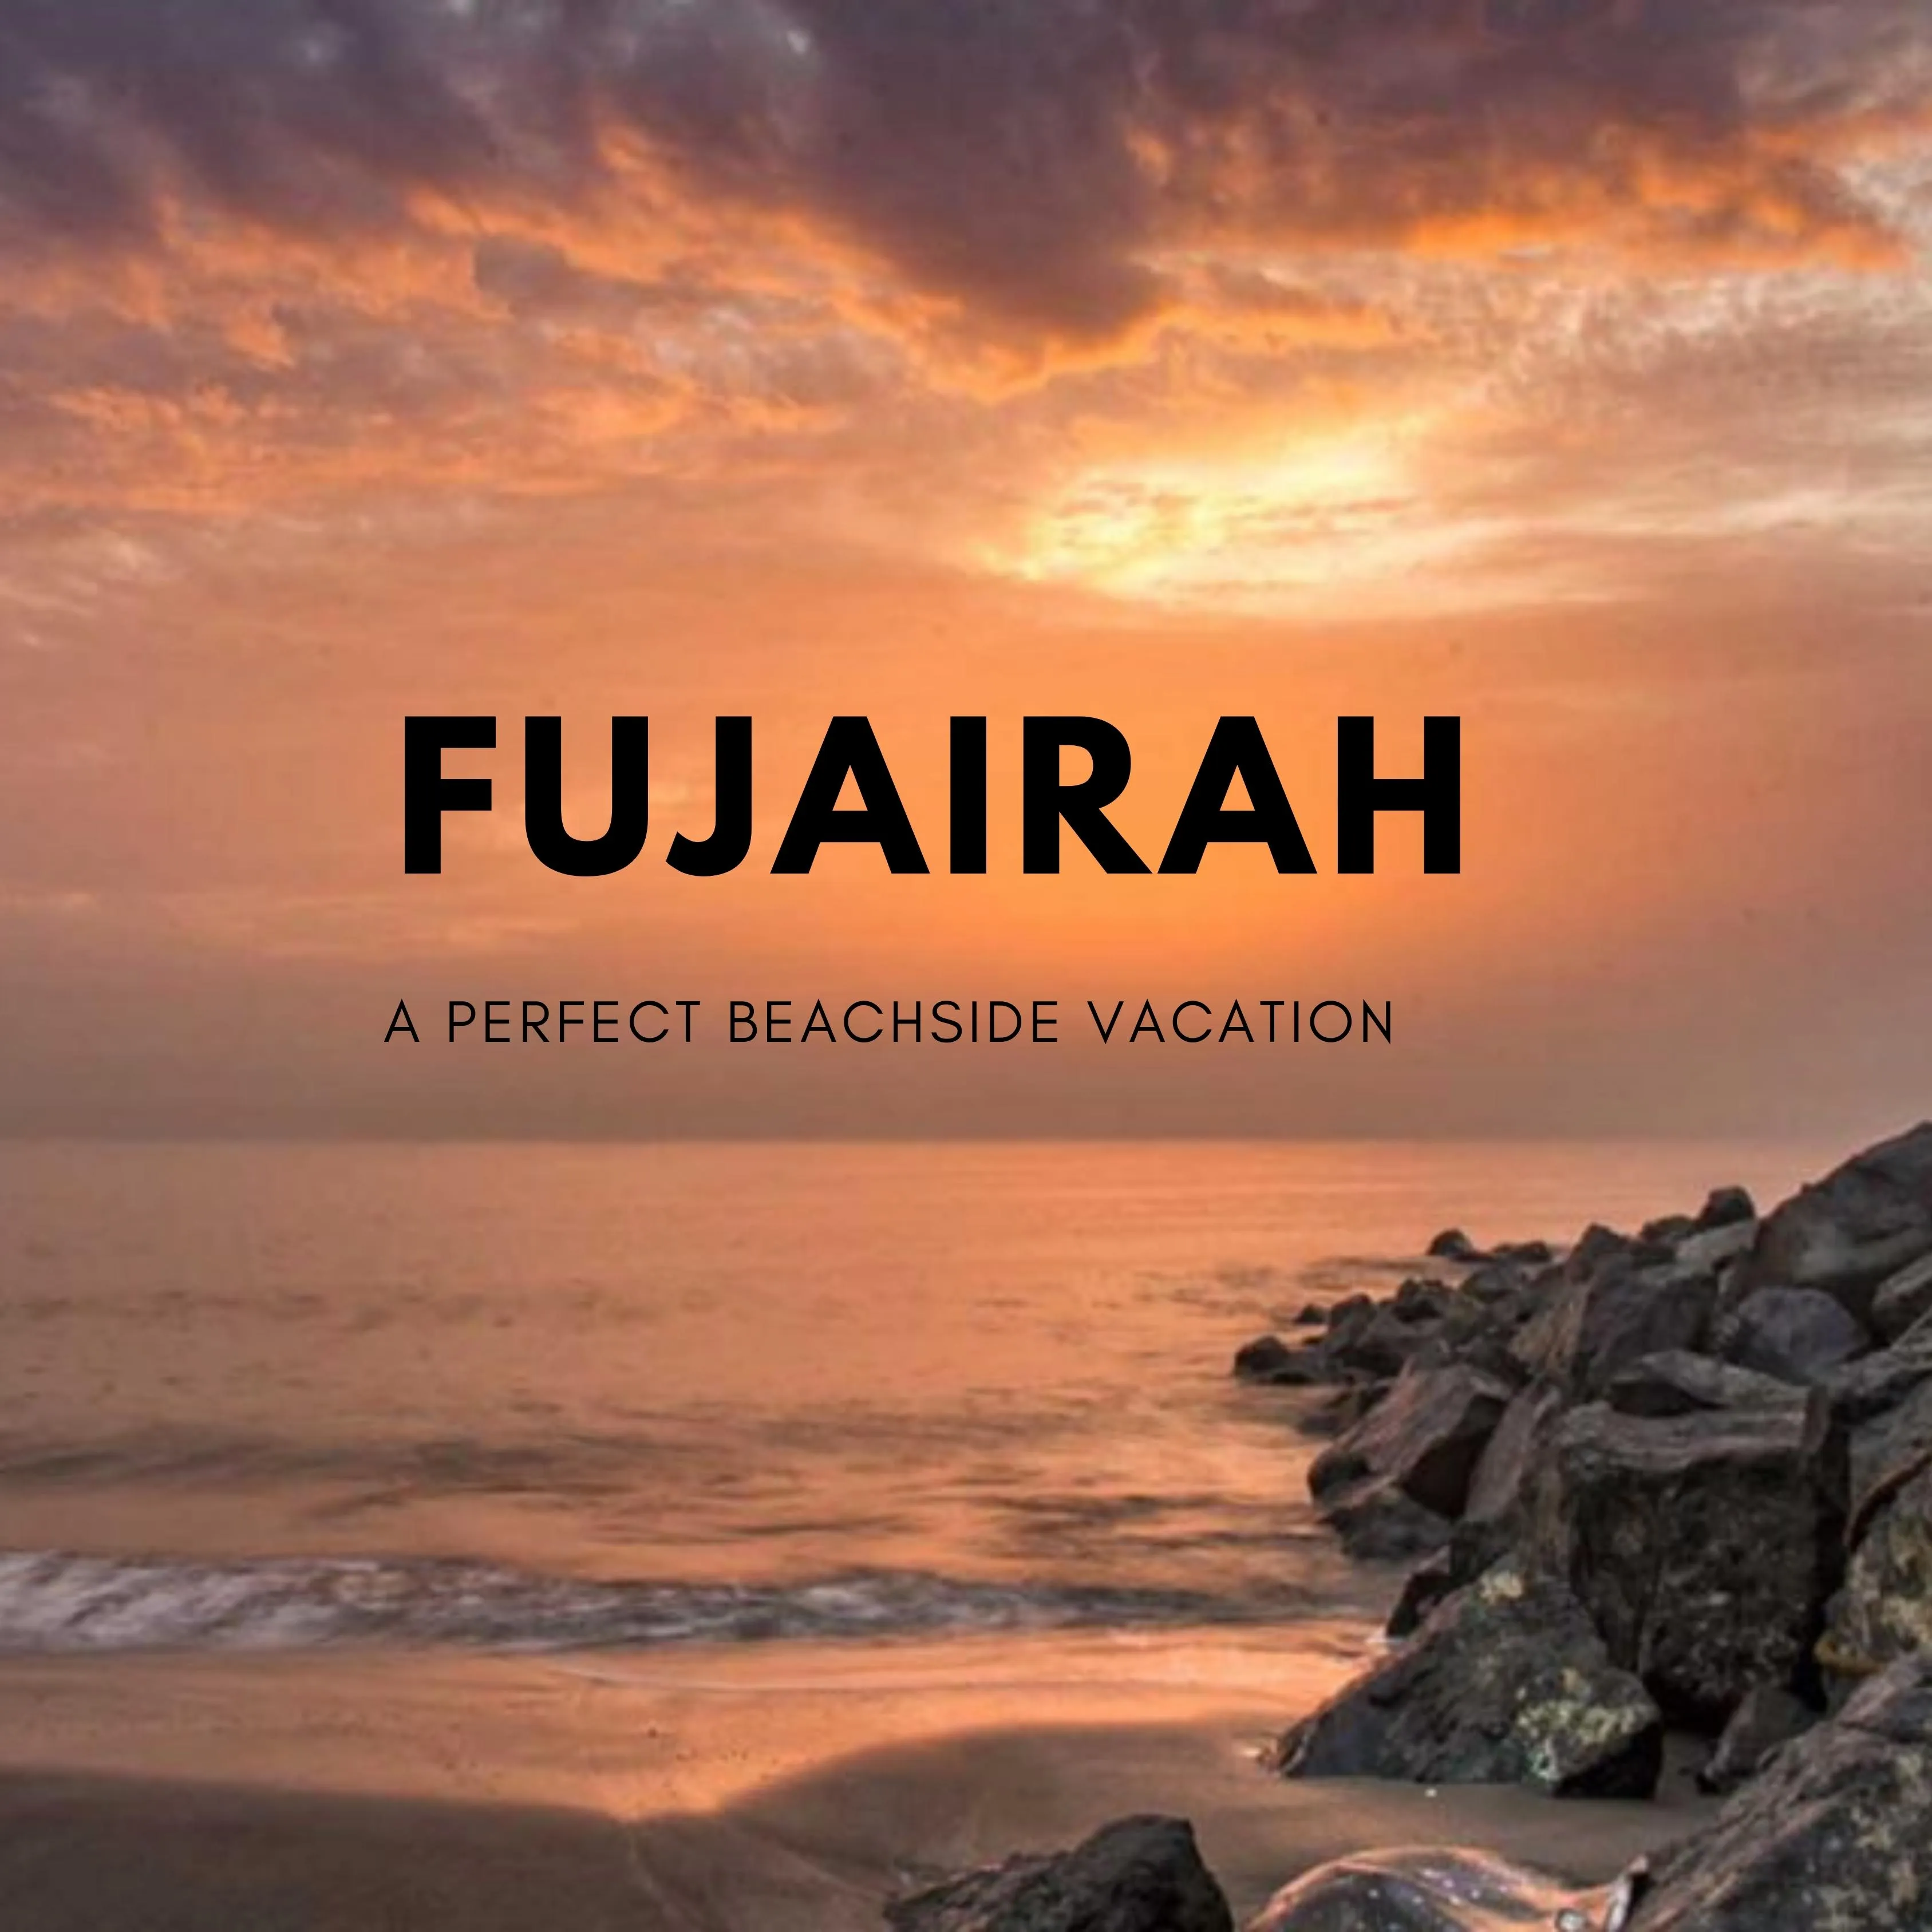 LIST OF TOP BEACHES IN FUJAIRAH